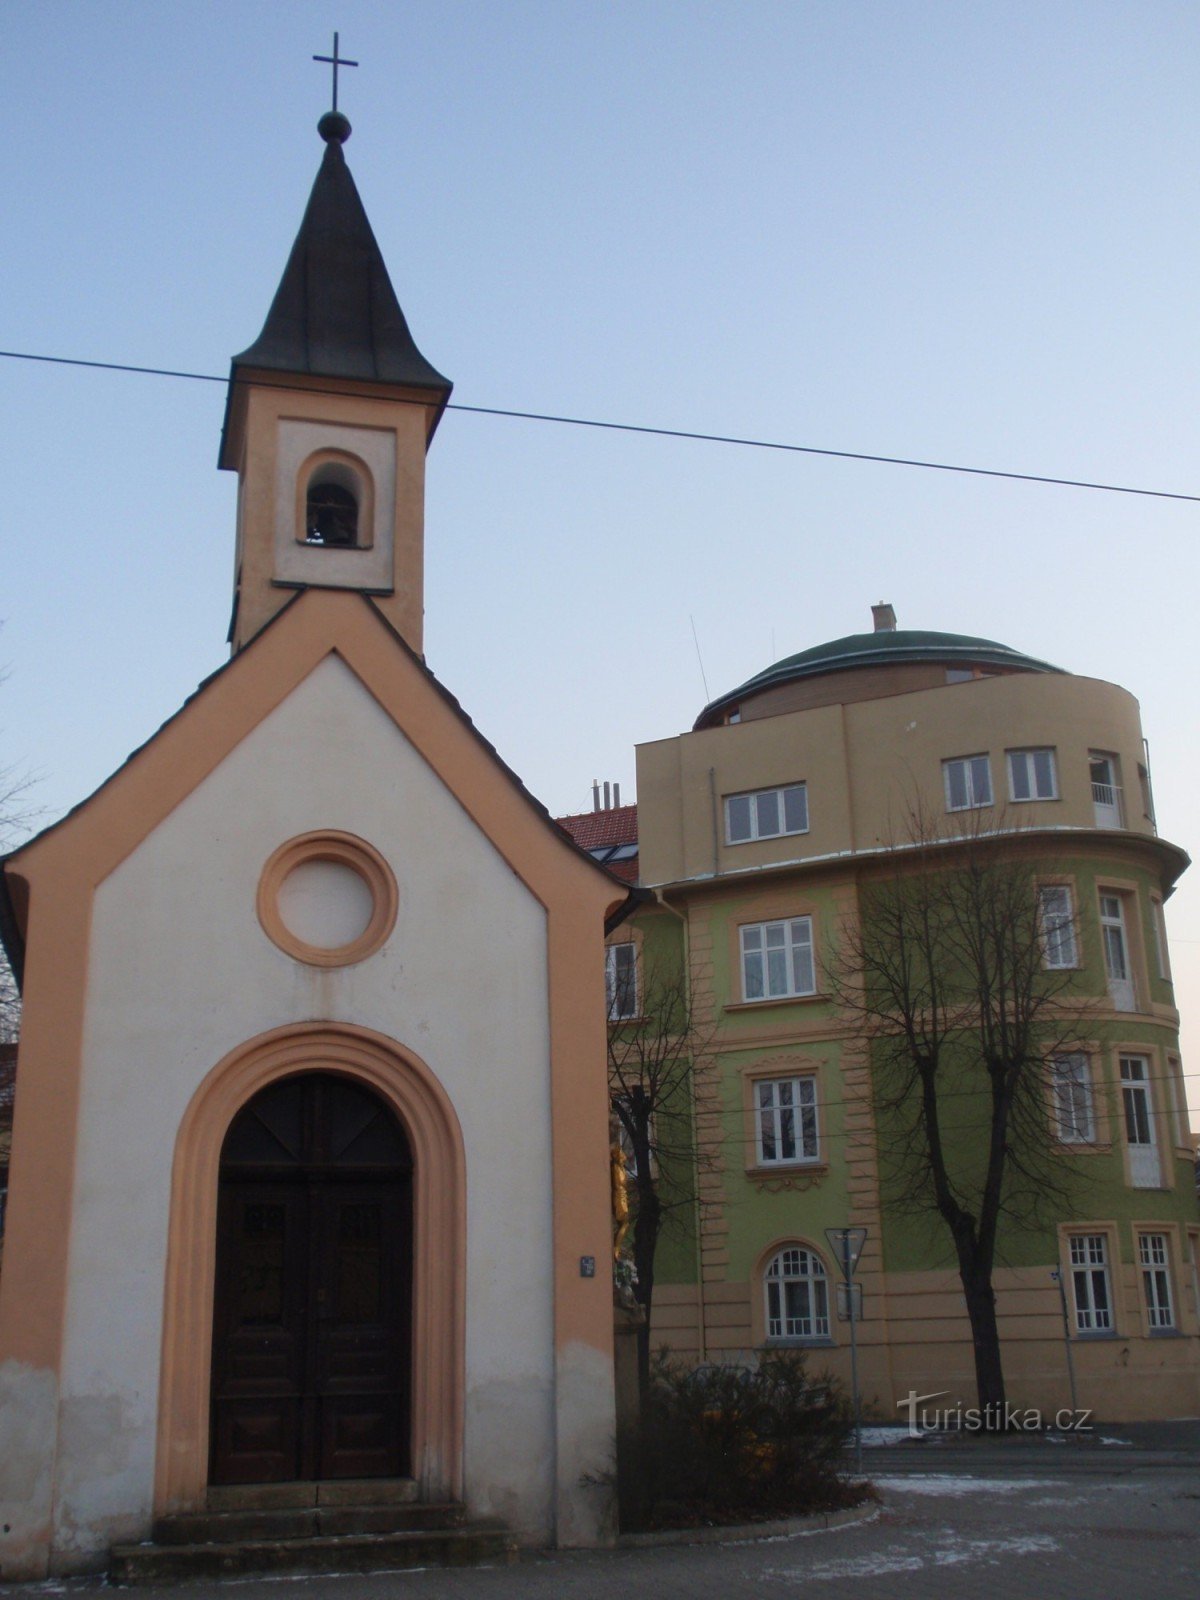 Kappeli St. Františka Brno-Židenicessa